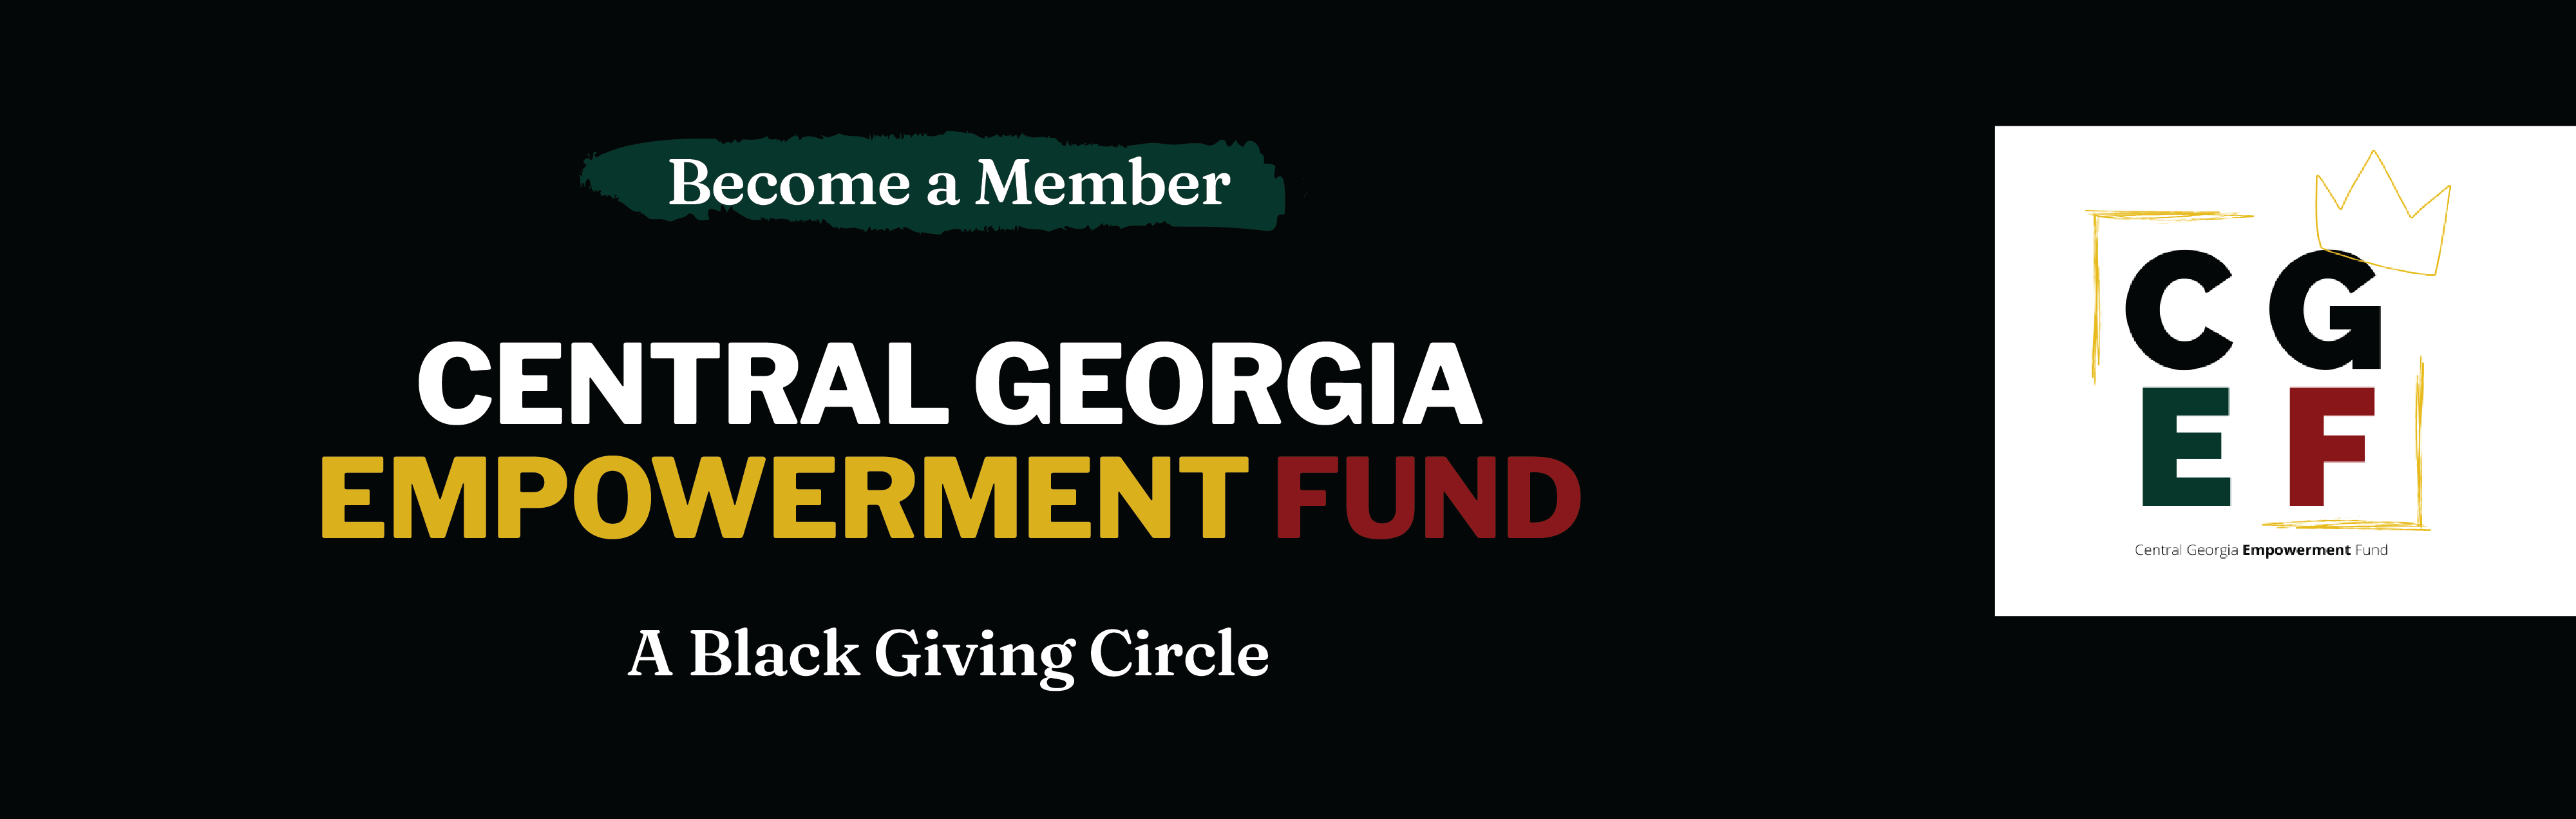 Central Georgia Empowerment Fund: A Black Giving Circle